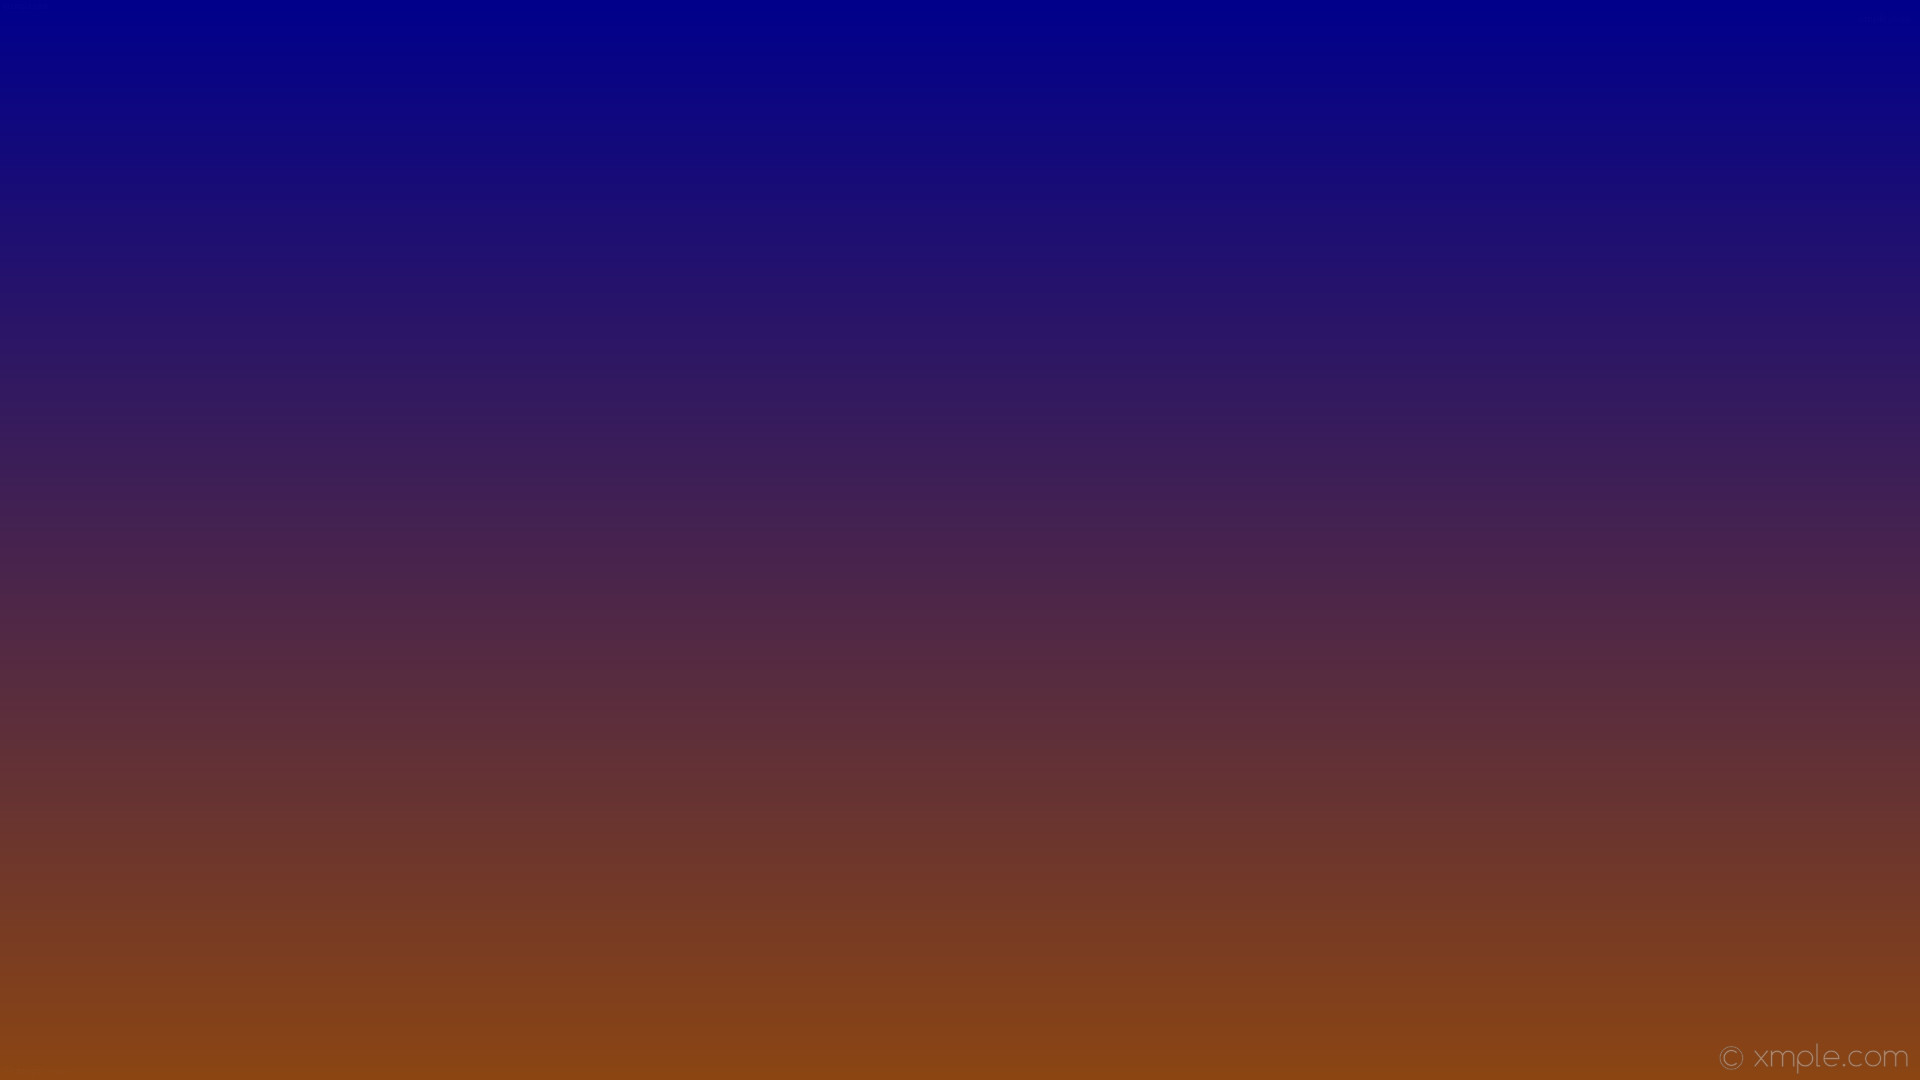 1920x1080 wallpaper gradient blue brown linear dark blue saddle brown #00008b #8b4513  90Â°